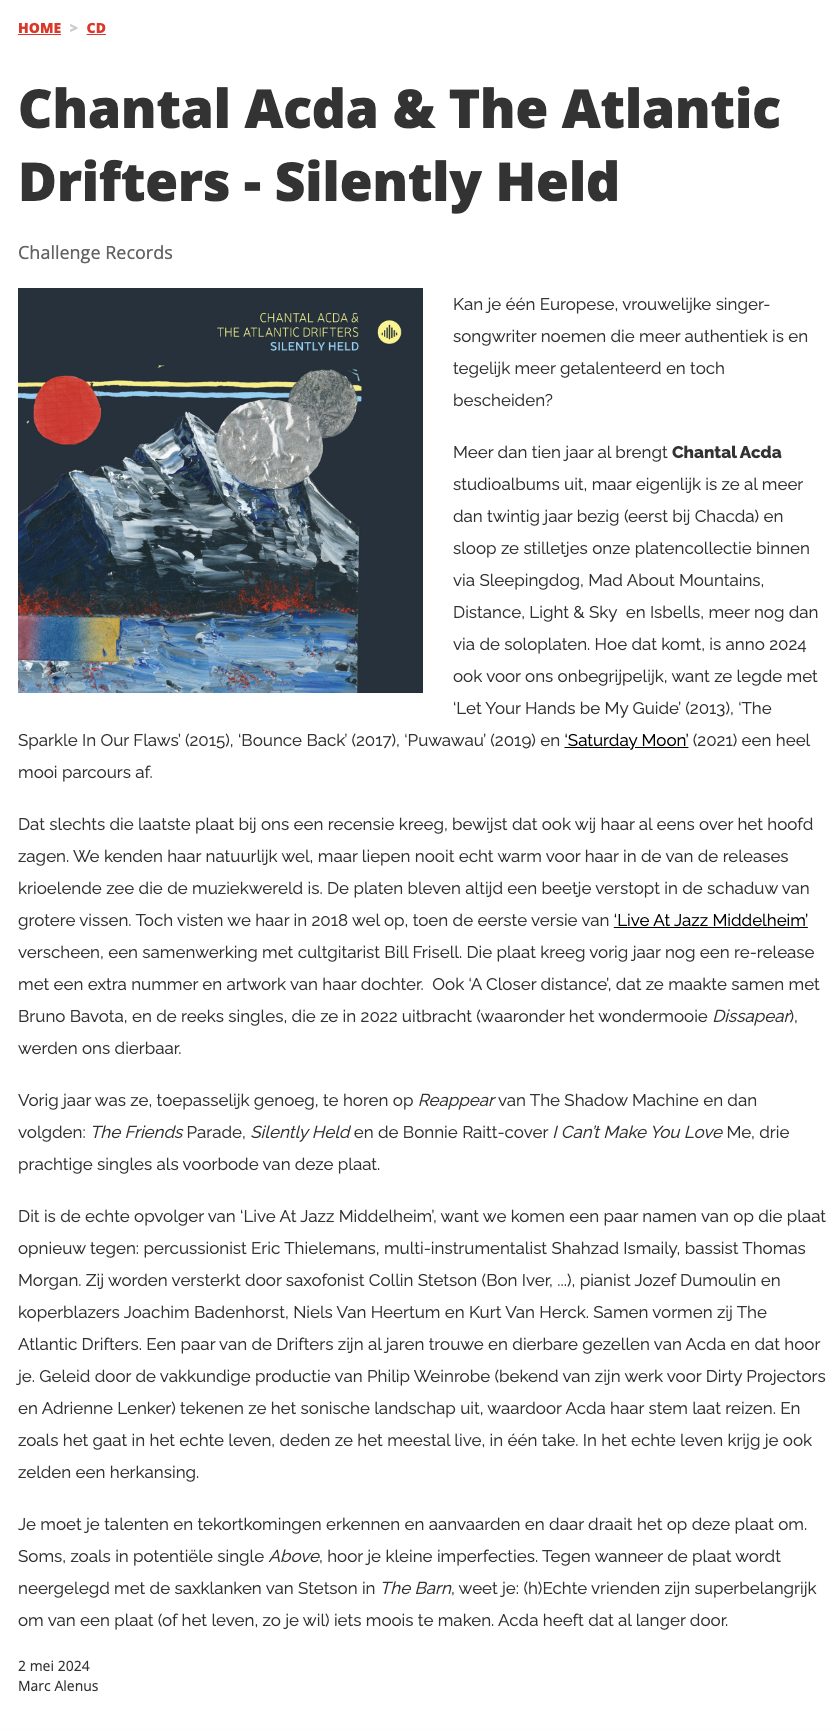 Chantal Acda & The Atlantic Drifters Silently Held album review daMusic